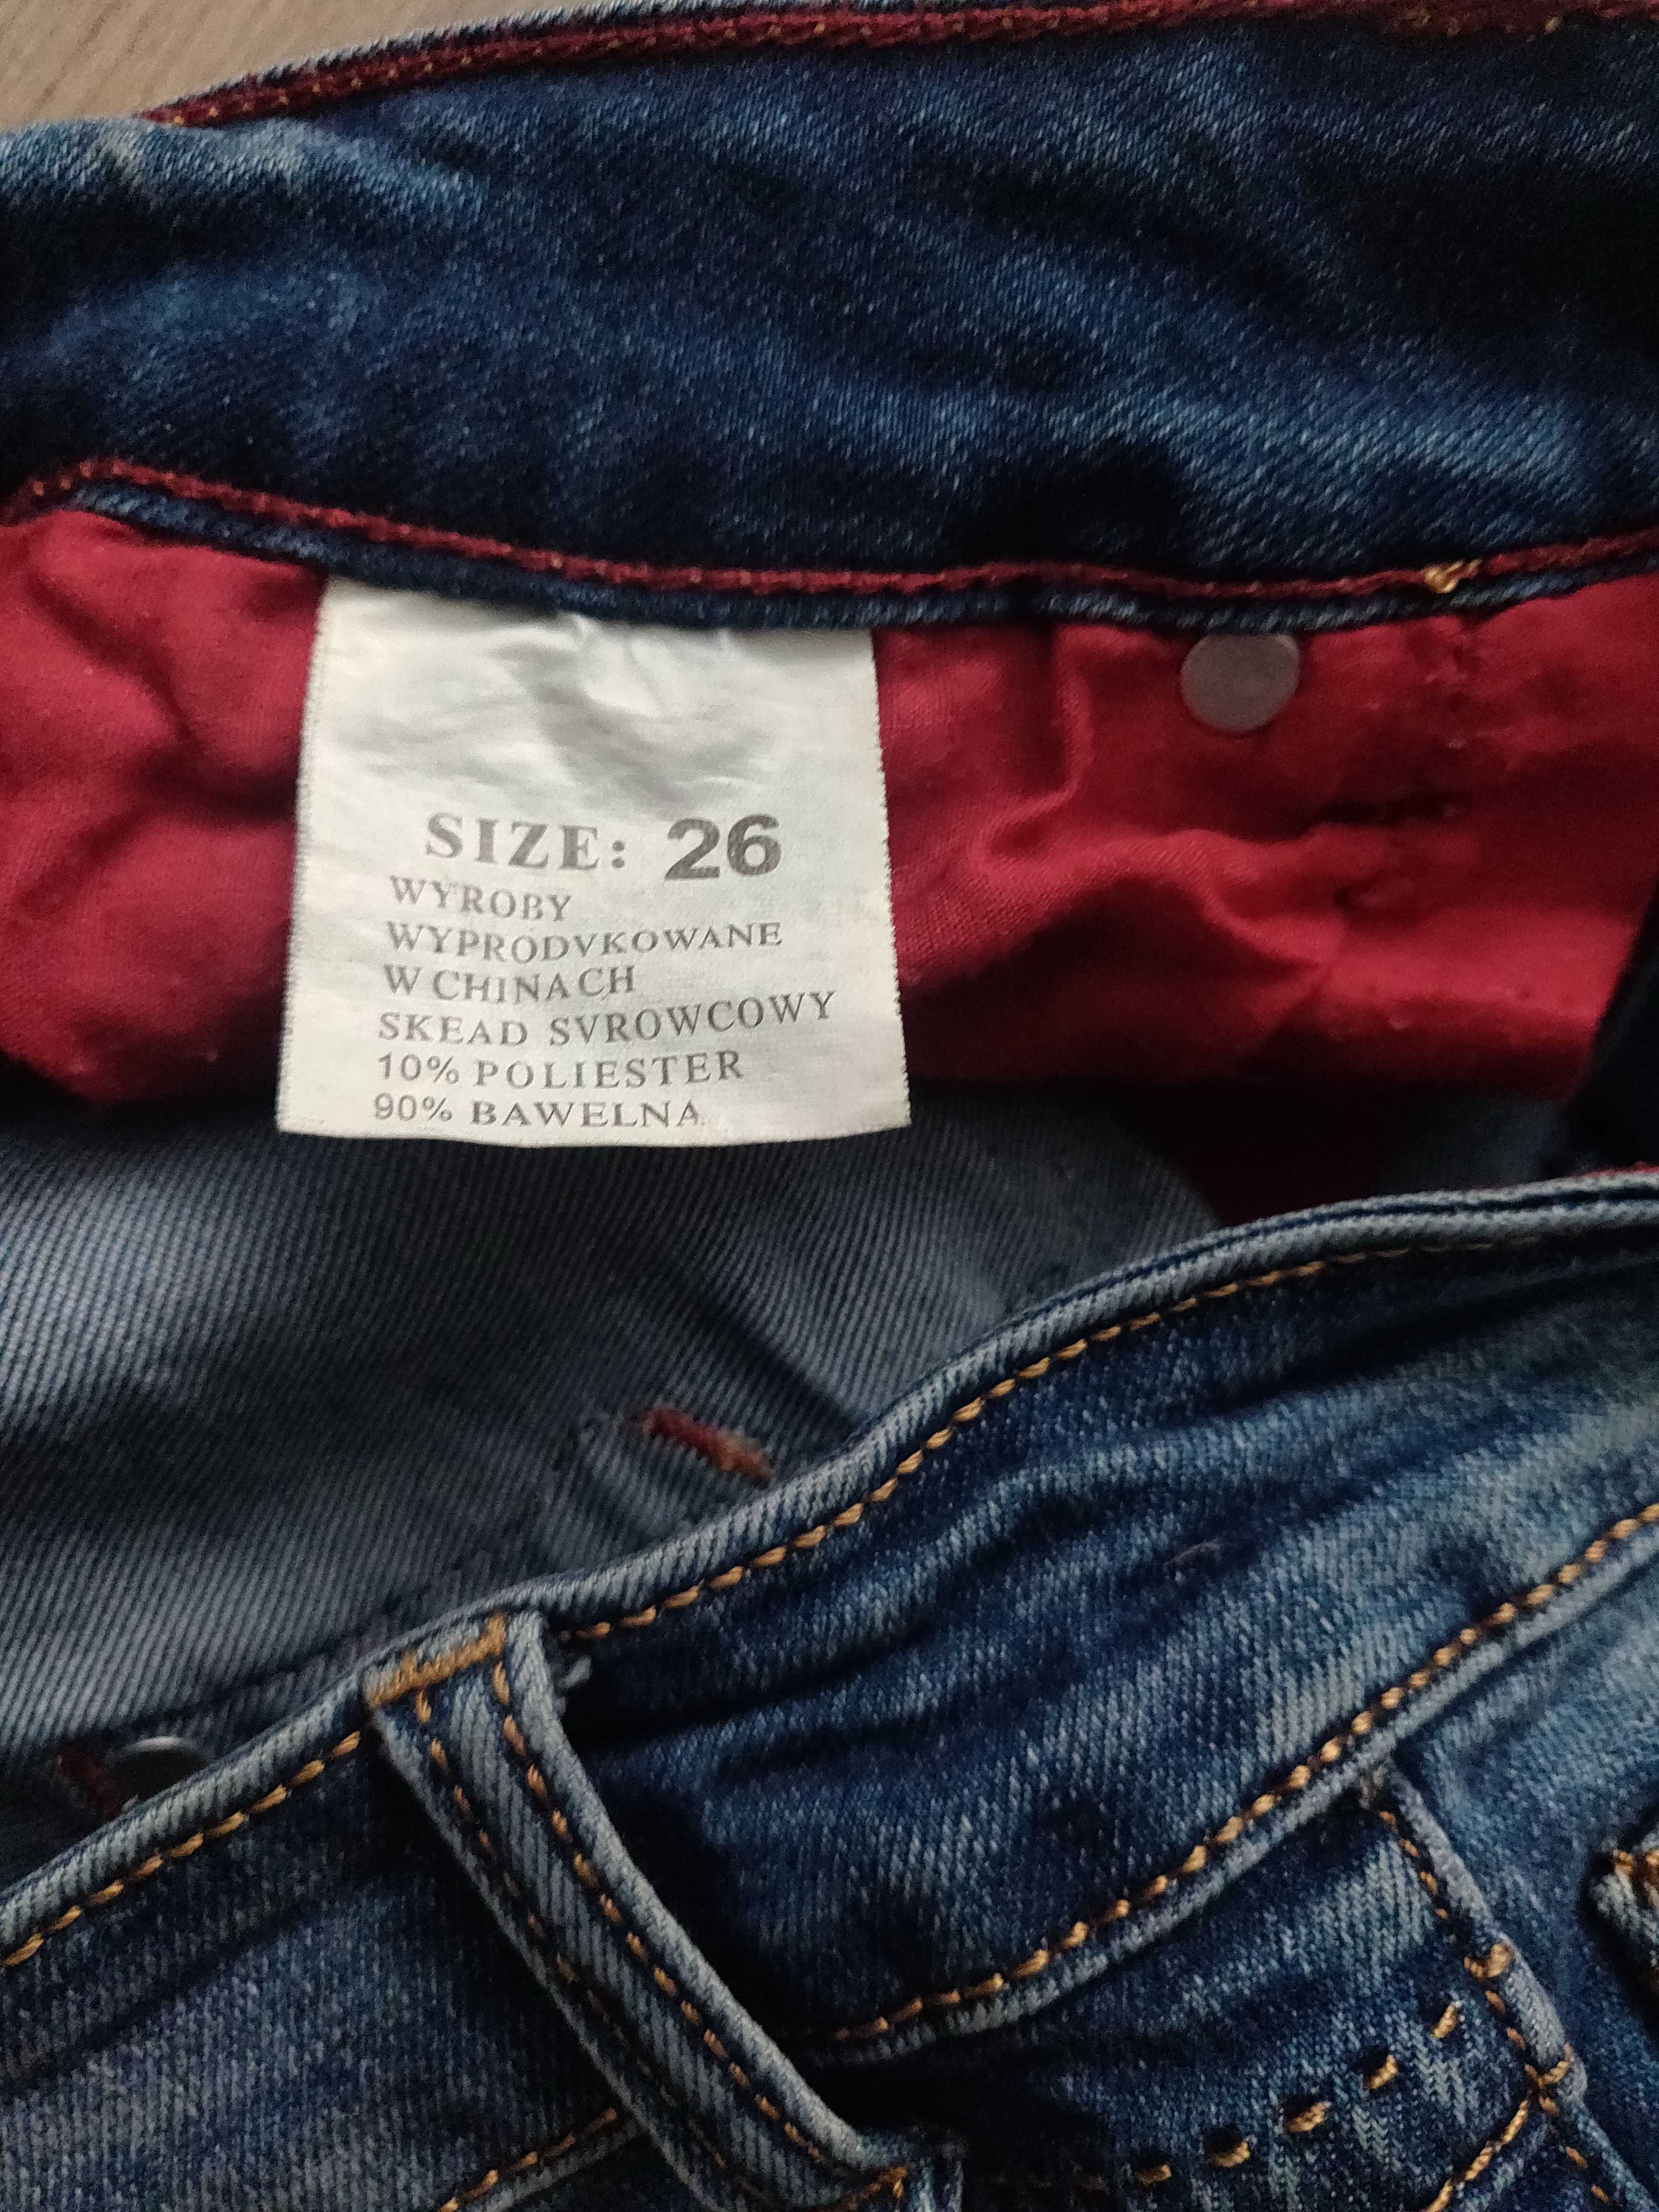 Джинсы женские Rich Berg (Italia Jeans) р. 26, синие